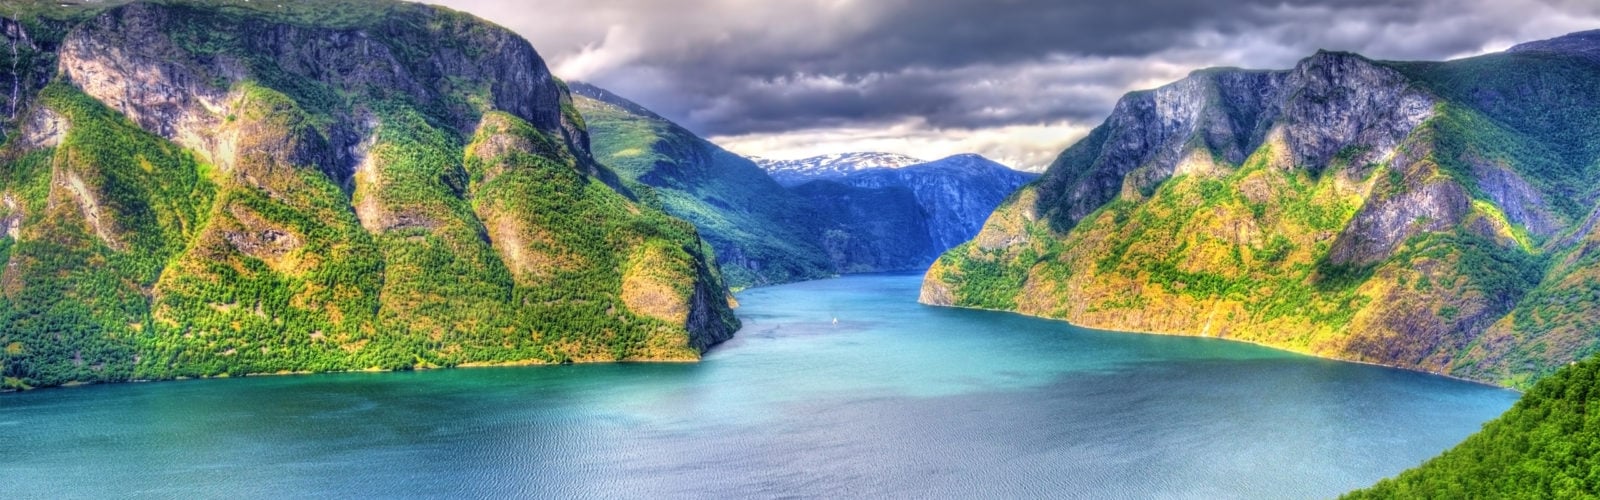 View of Aurlandsfjord from Stegastein viewpoint - Norway